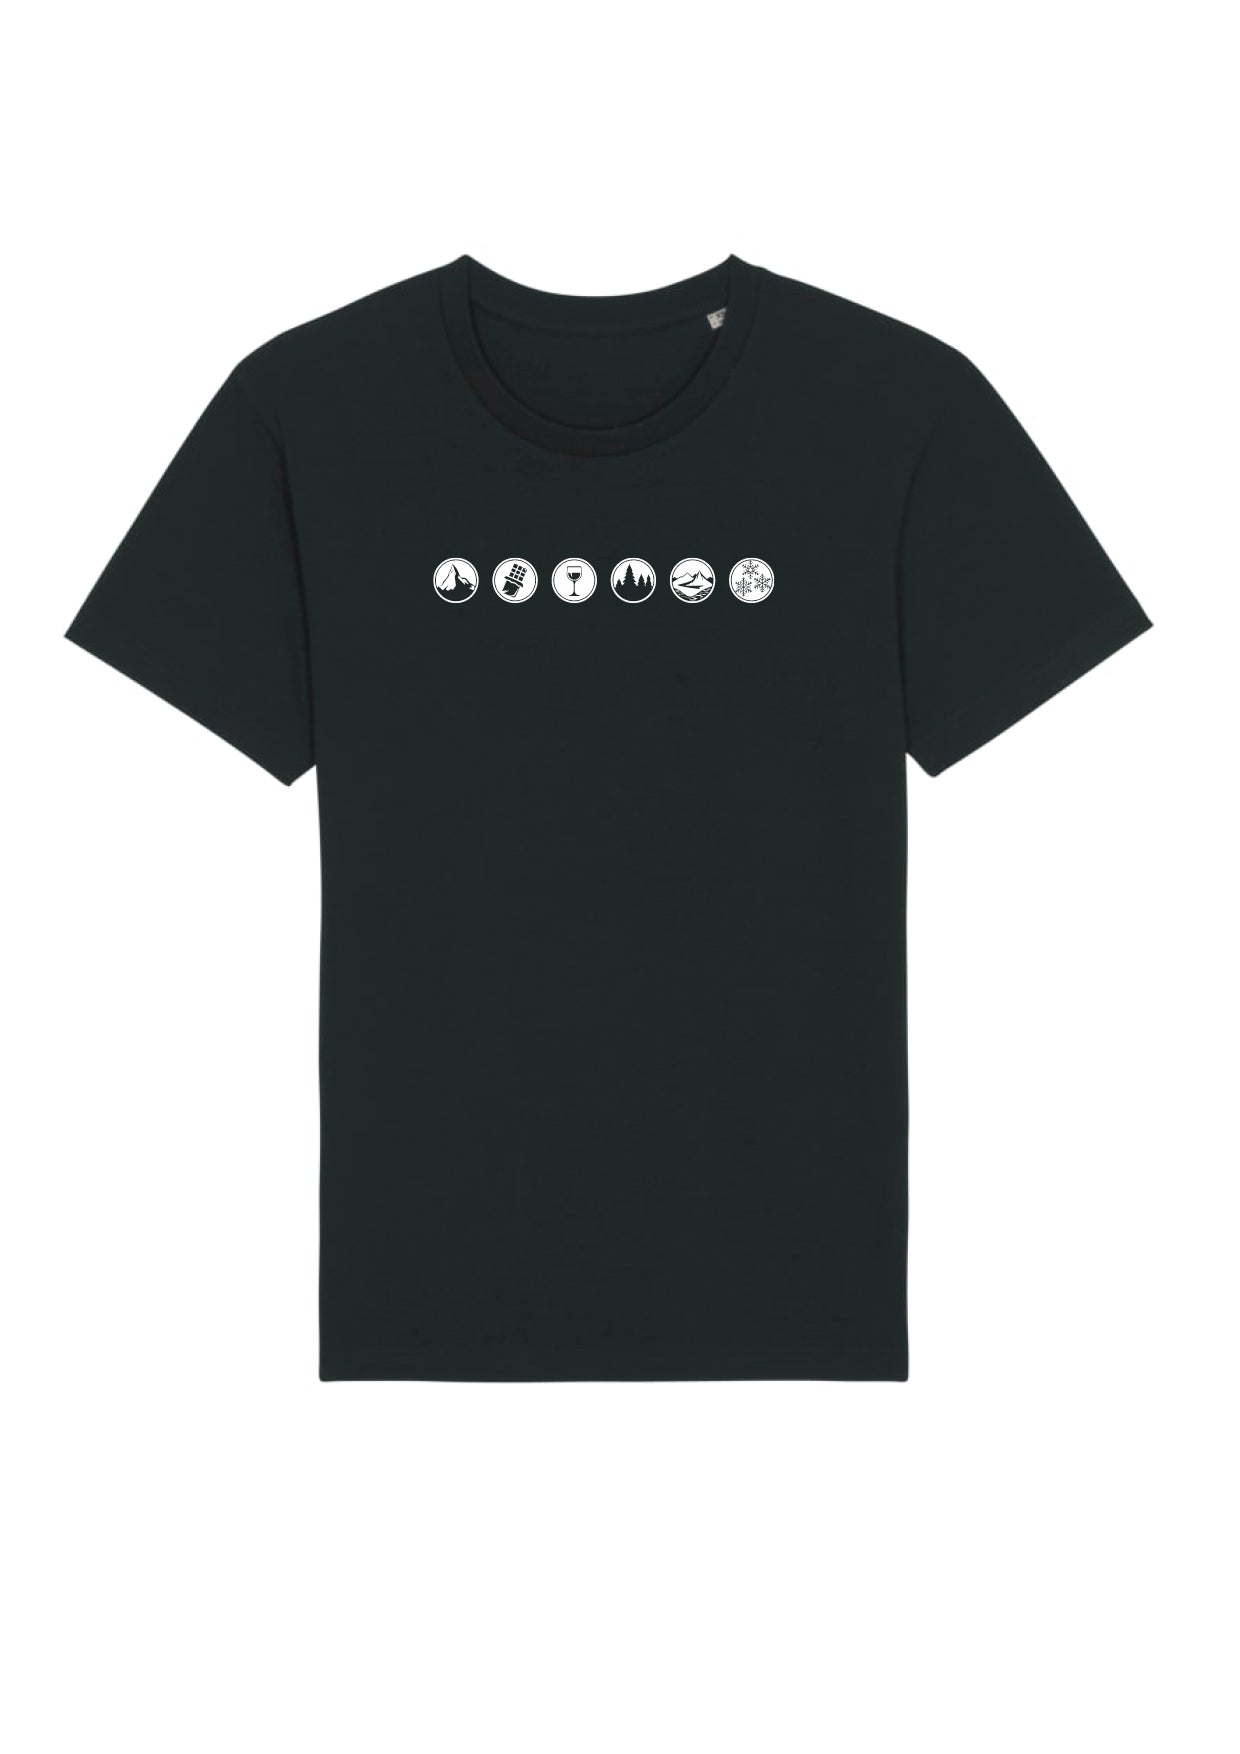 Zuegab Tour - T-Shirt